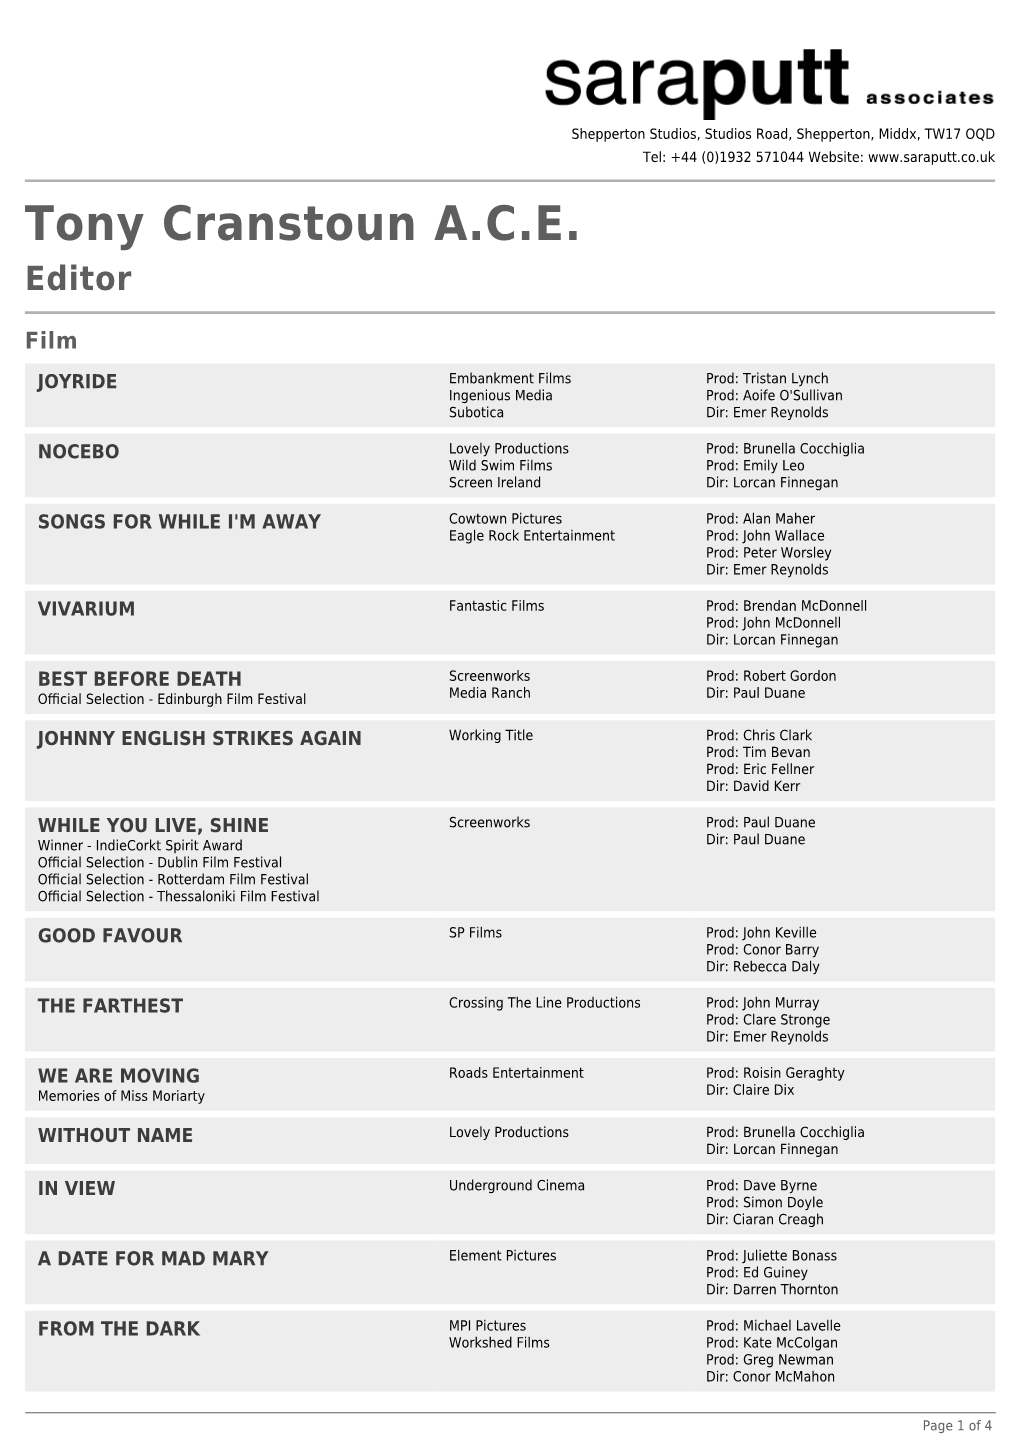 Tony Cranstoun A.C.E